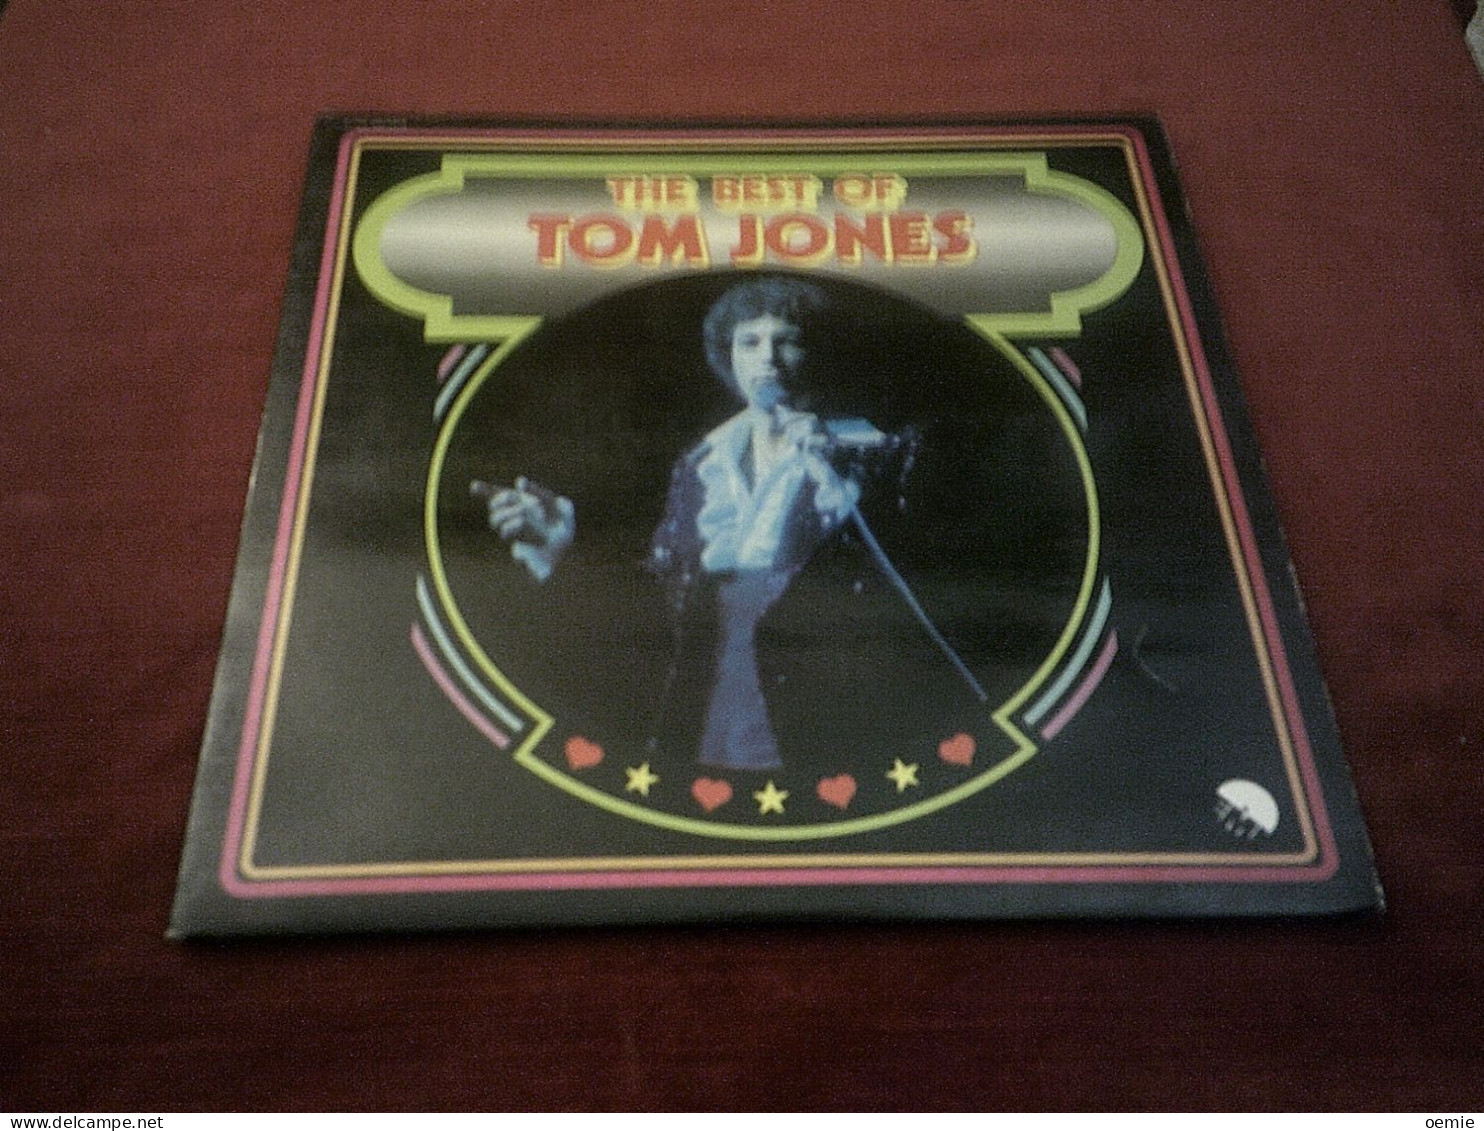 TOM JONES    THE  BEST OF  ALBUM DOUBLE - Other - English Music